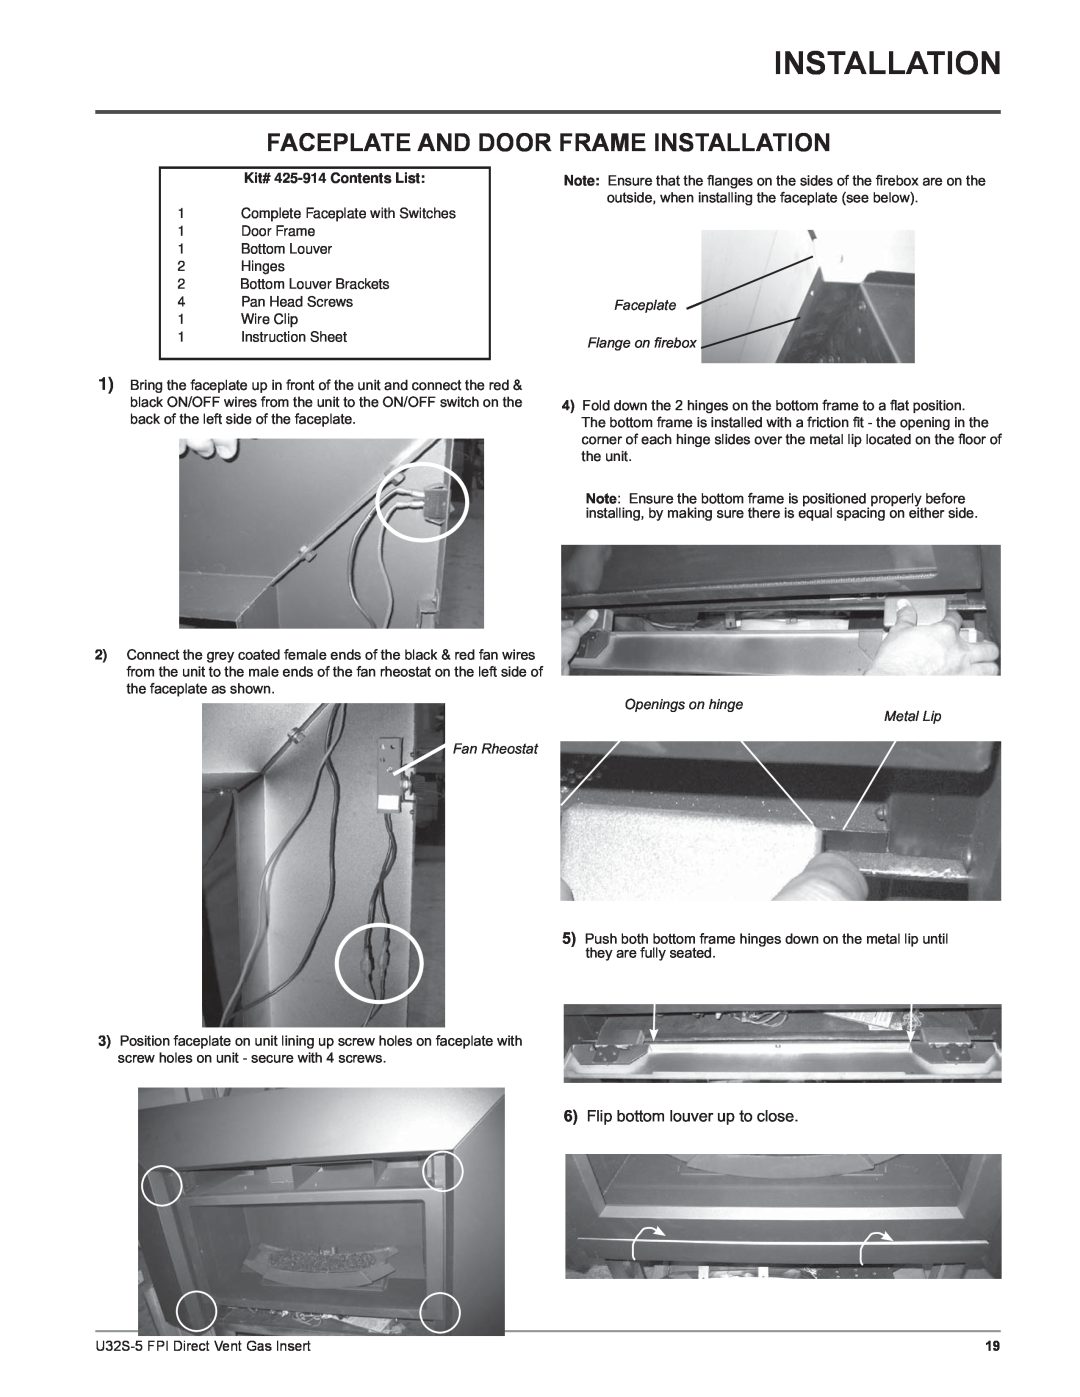 Regency U32S-LP5 Faceplate And Door Frame Installation, Kit# 425-914Contents List, Faceplate Flange on ﬁ rebox 